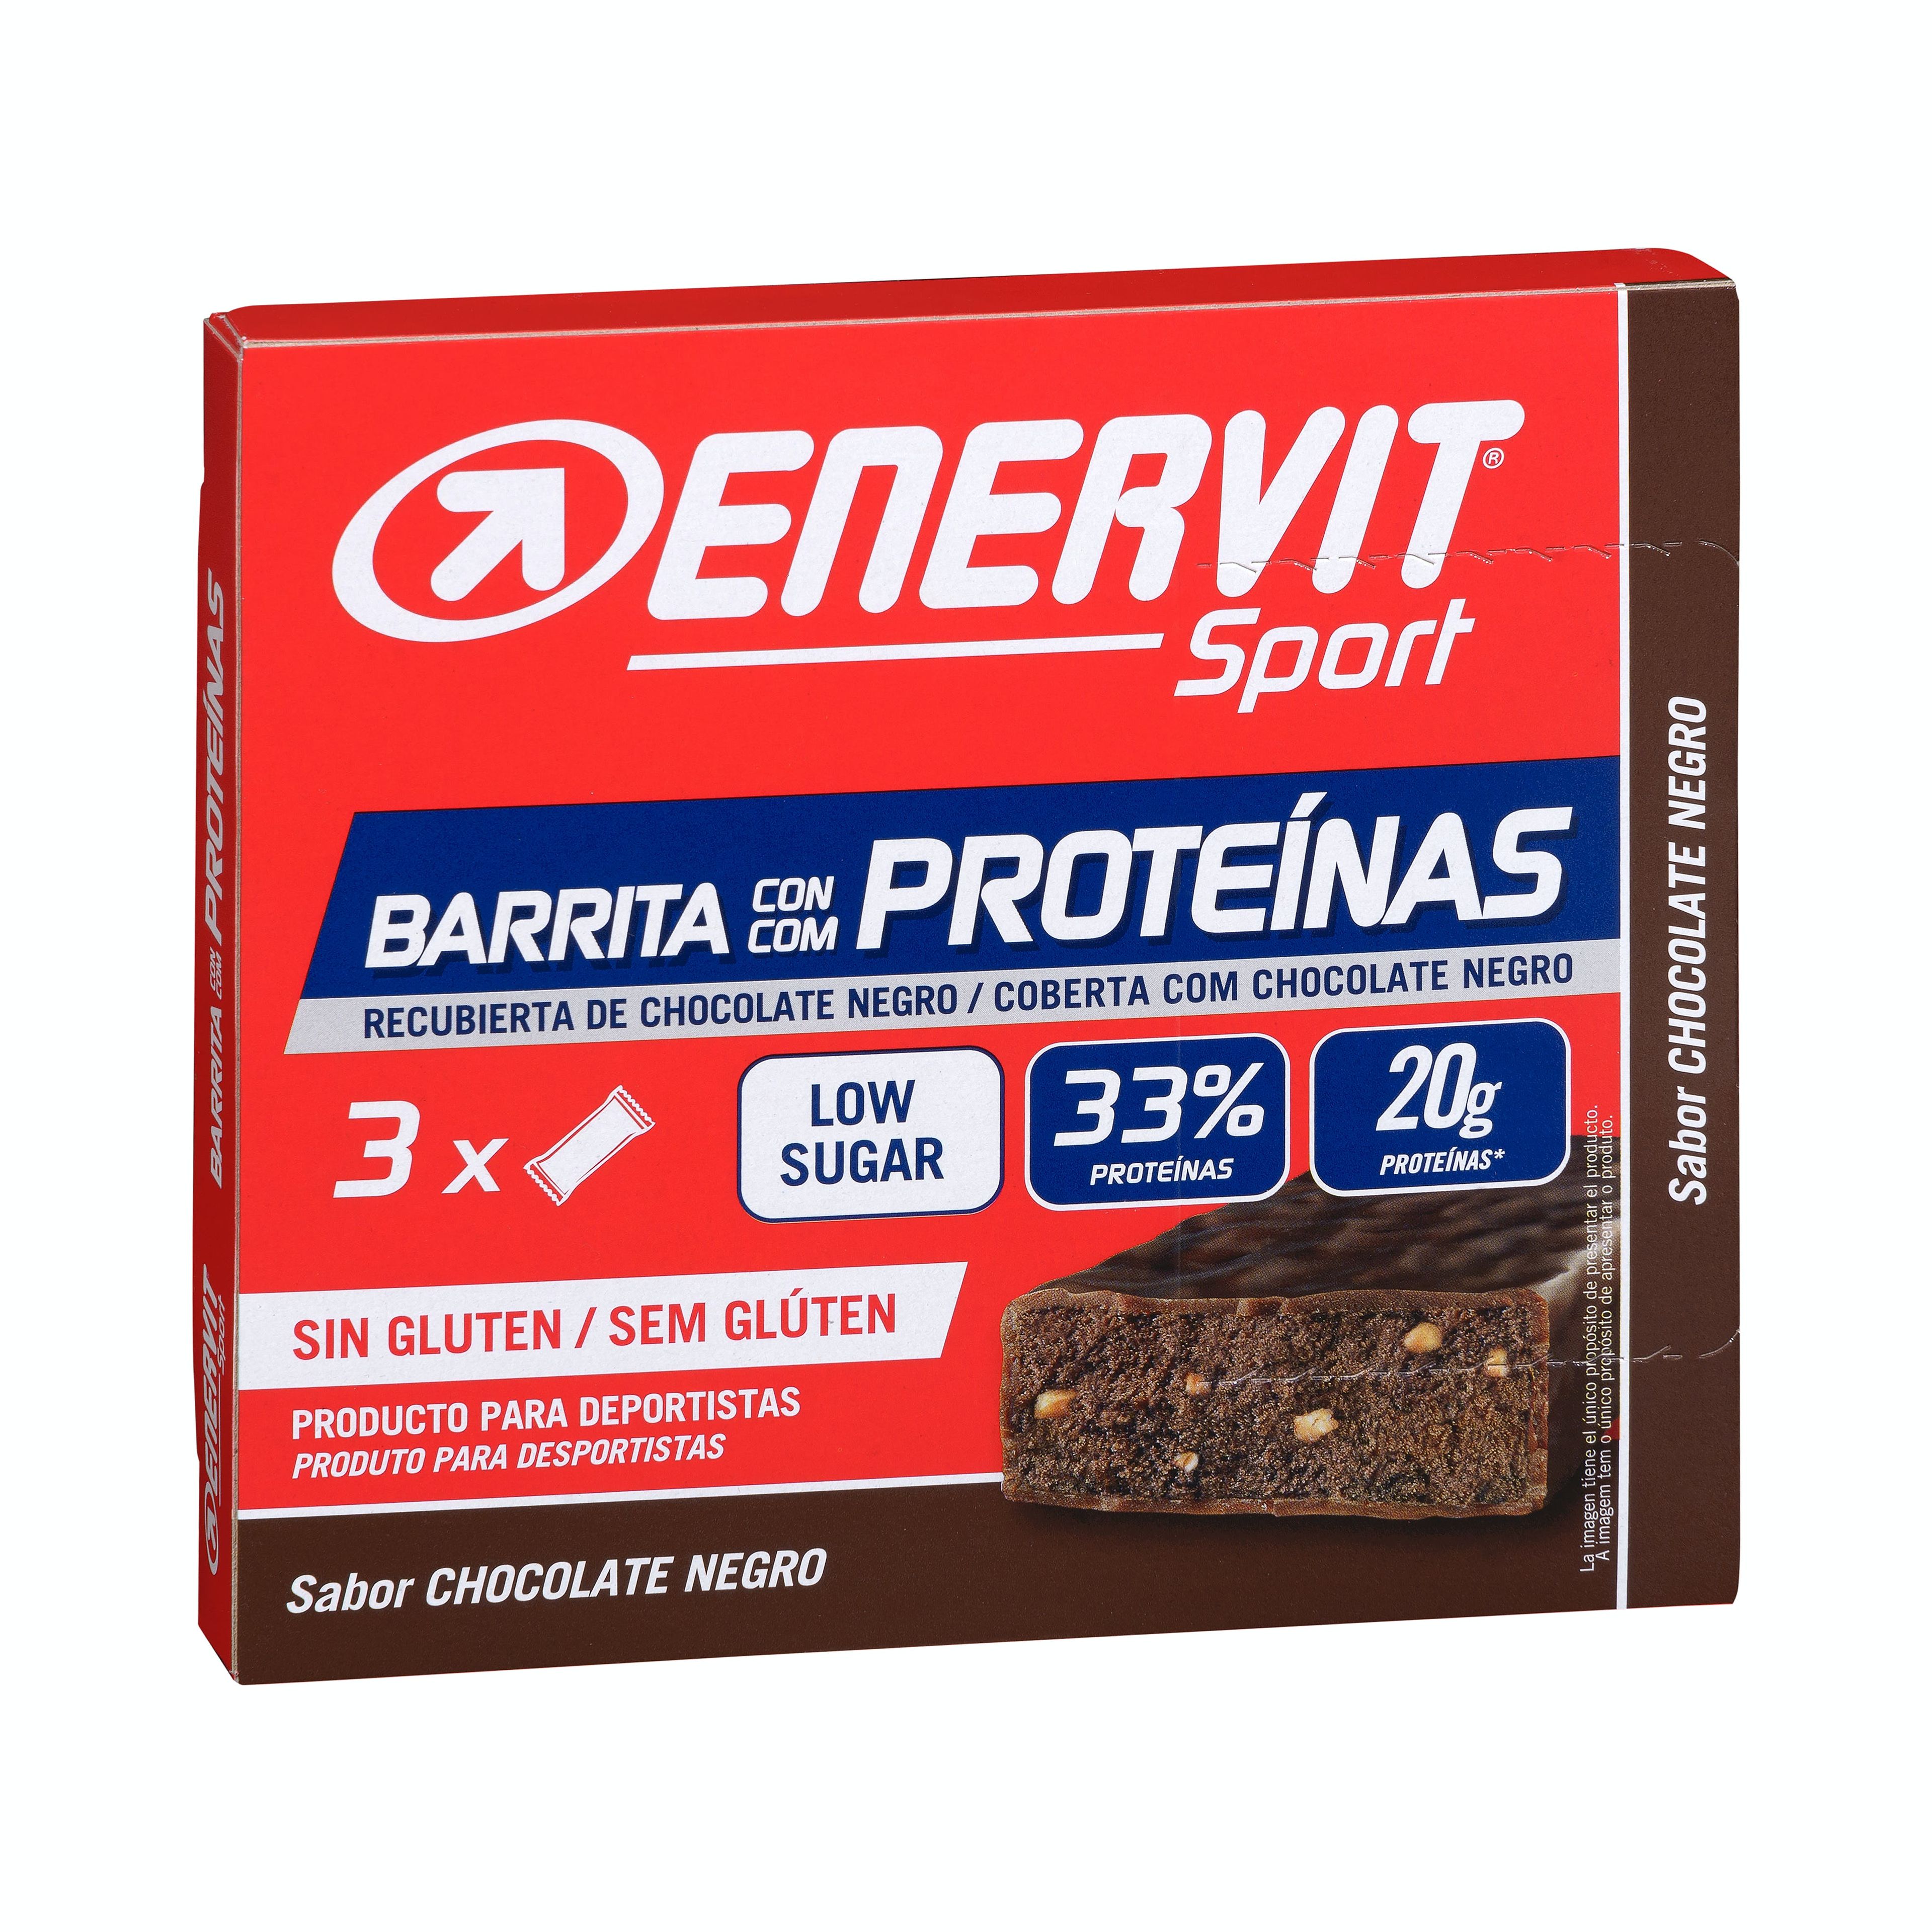 Barrita con proteínas Enervit Sport sabor chocolate negro, Mercadona